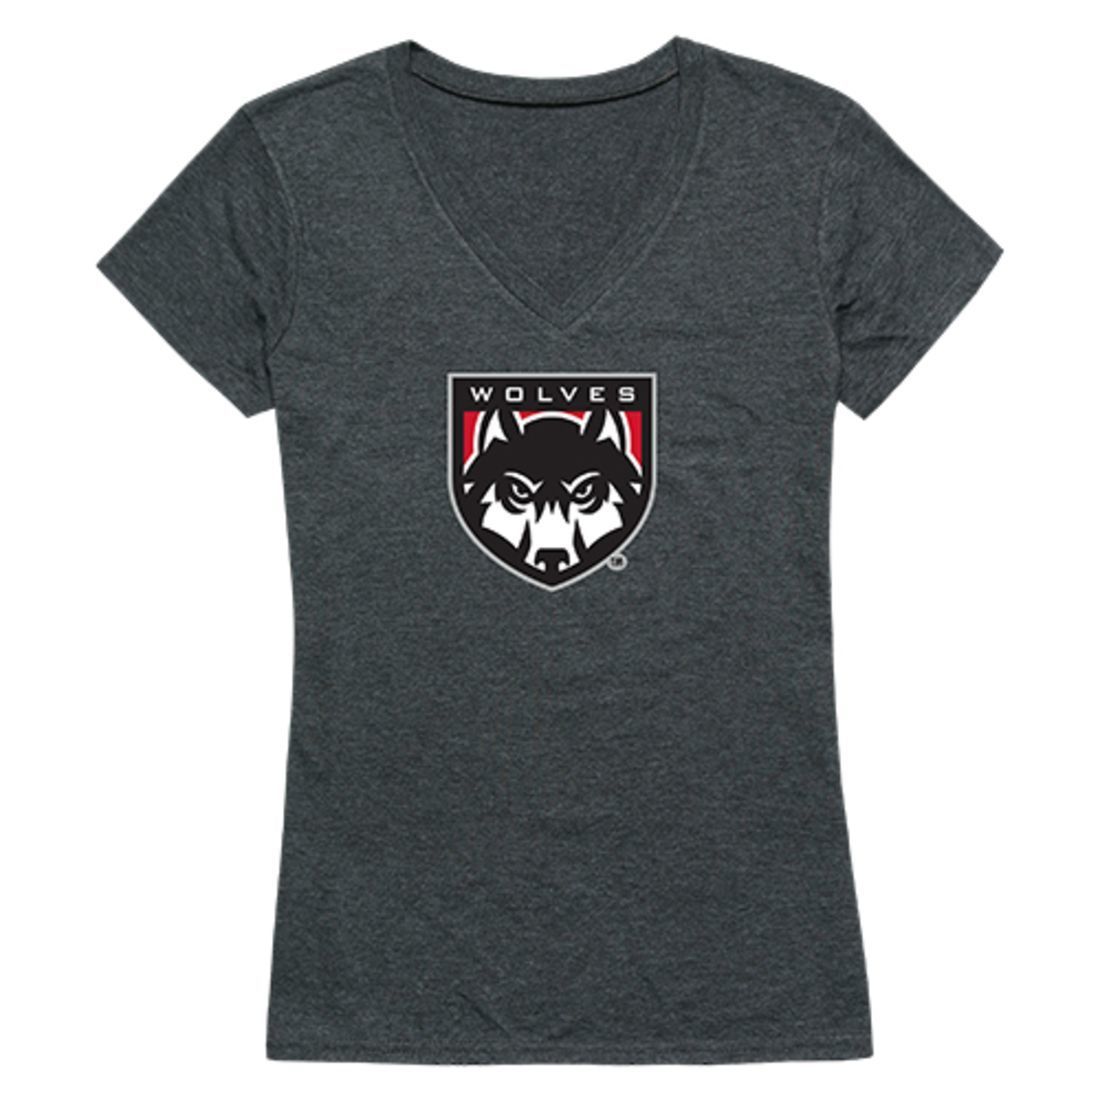 WOU Western Oregon University Wolves Womens Cinder T-Shirt Heather Charcoal-Campus-Wardrobe